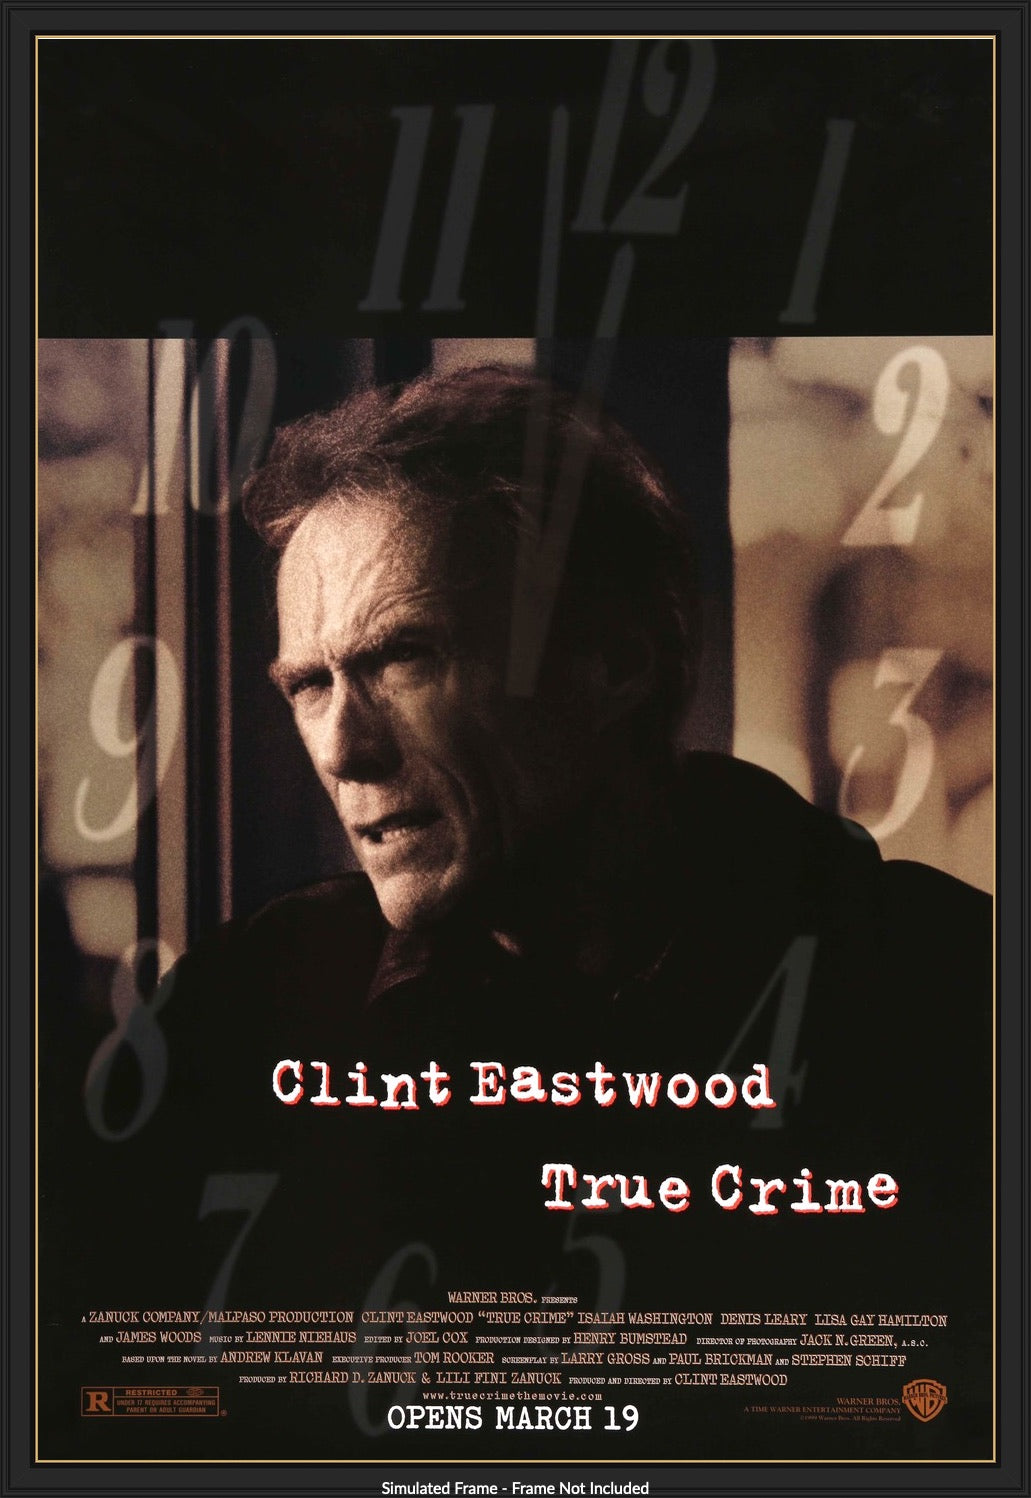 True Crime (1999) original movie poster for sale at Original Film Art